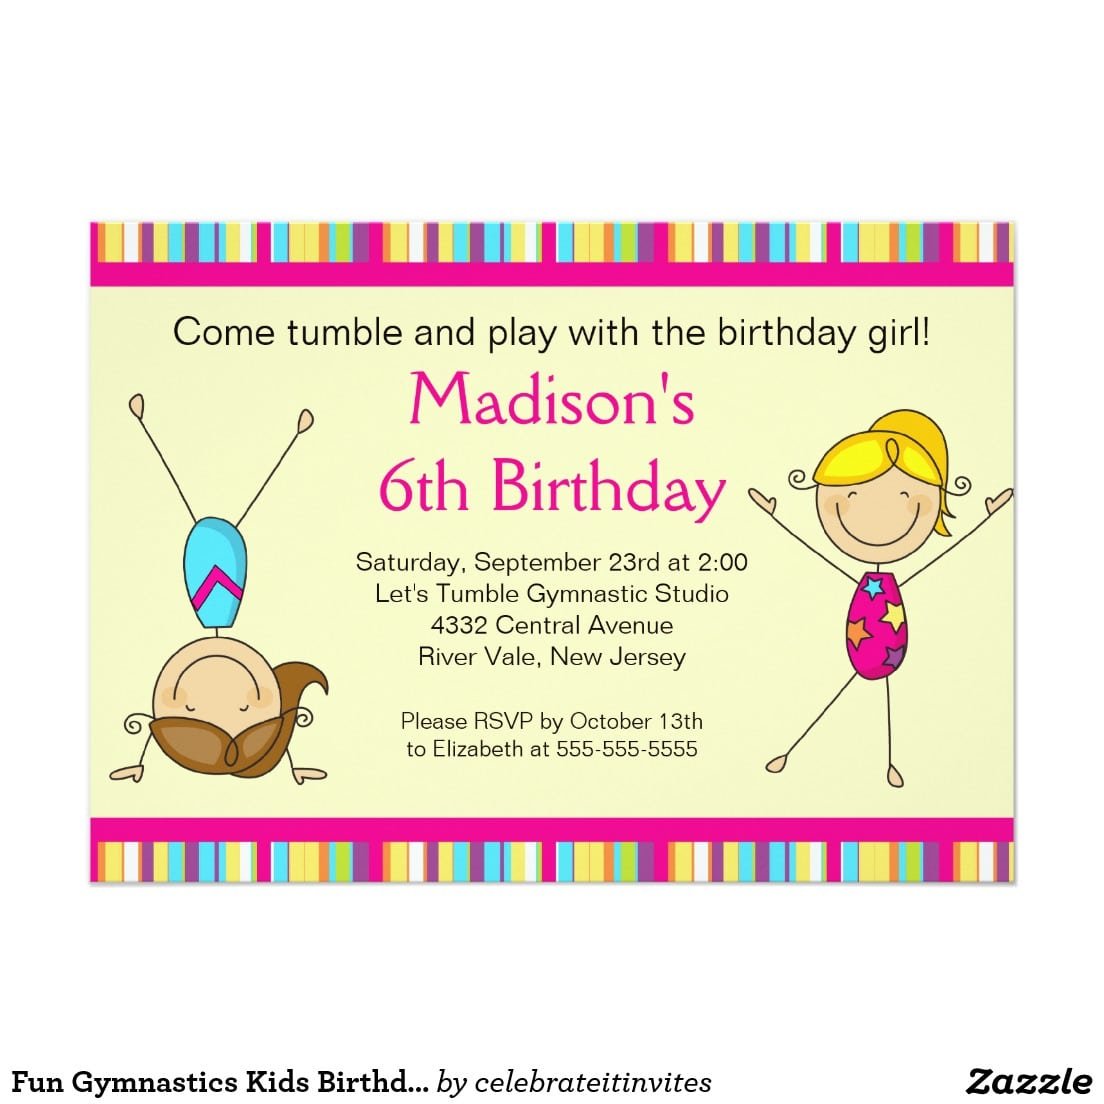 Kids Birthday Party Invitations